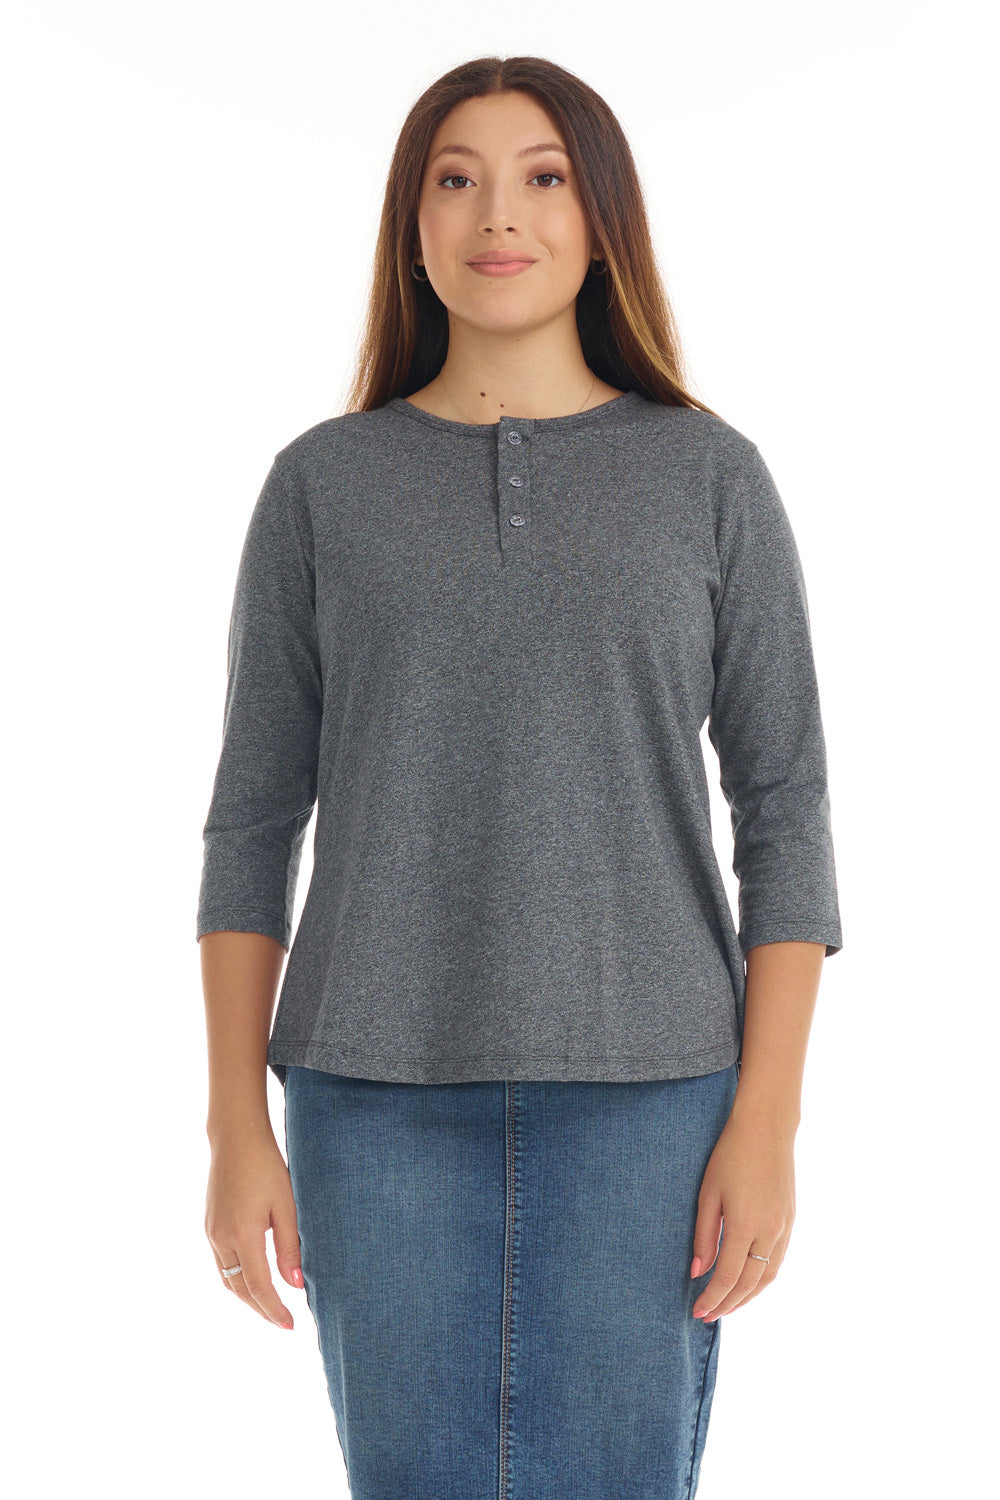 Charcoal Grey 3/4 Sleeve Cotton Henley Shirt for Women